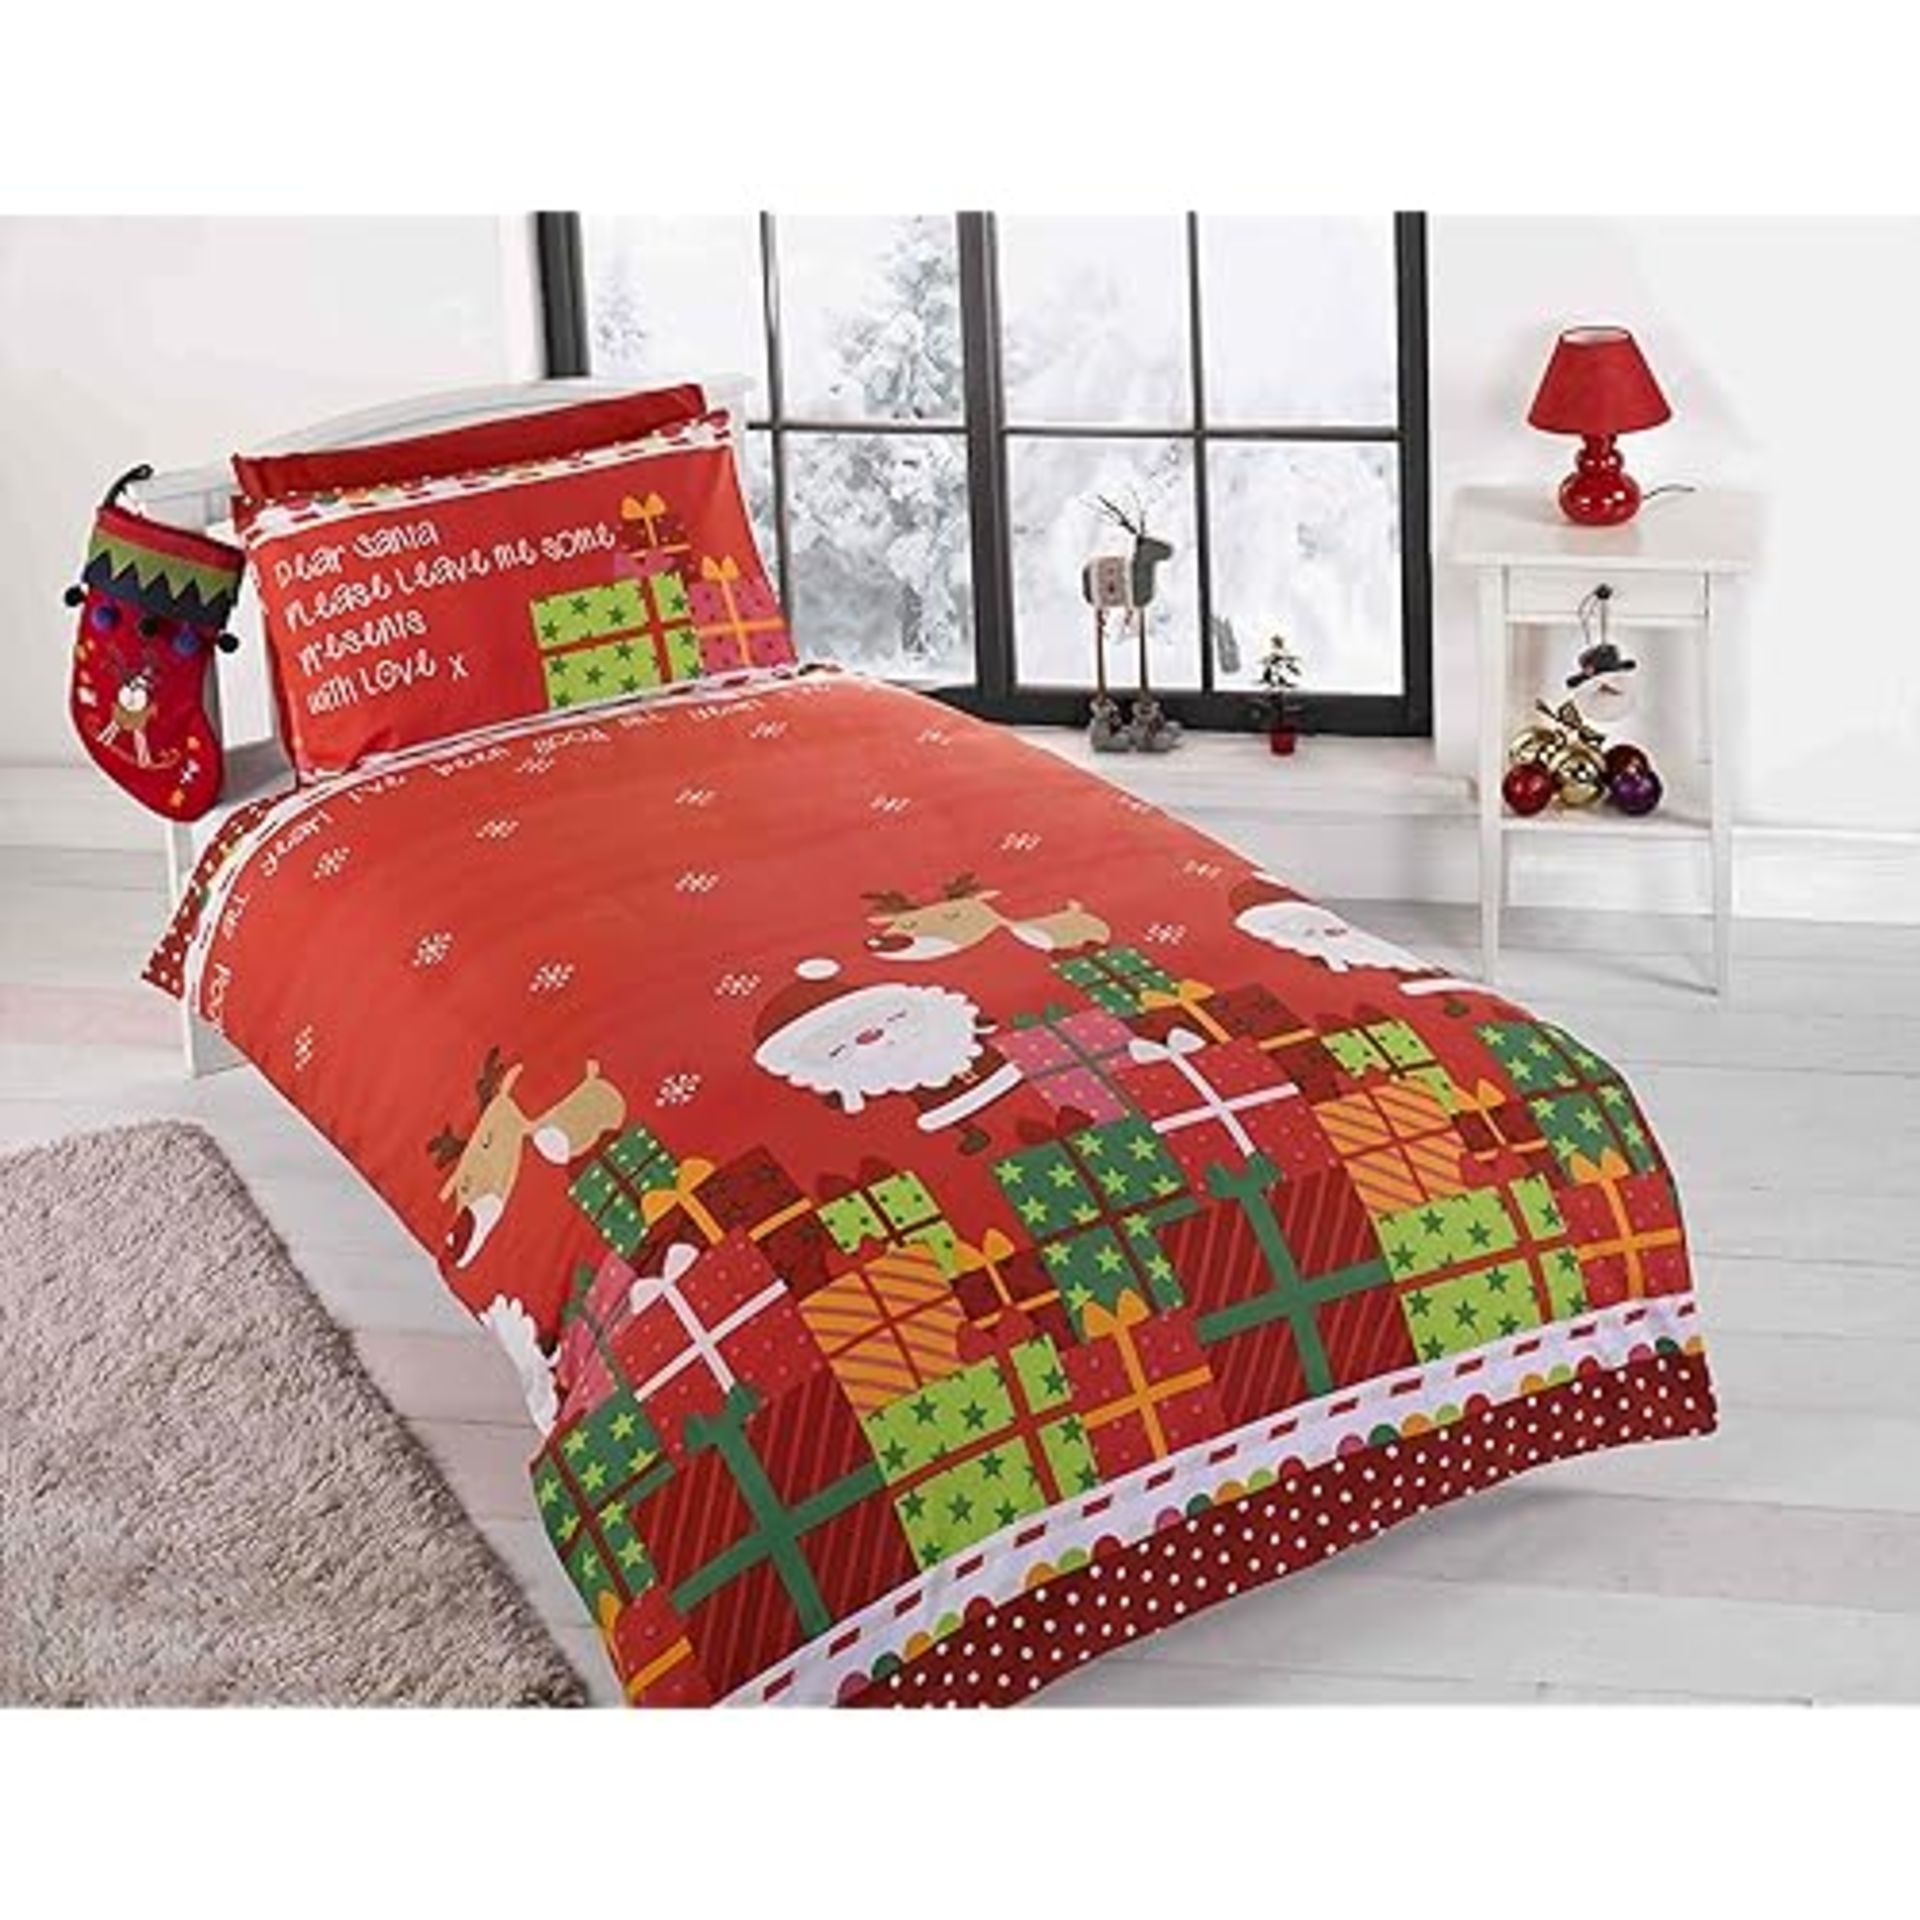 Rapport Home Kids Xmas Santa Claus Quilt Duvet Cover and Pillowcase Bedding Bed Set 2 Pieces Letter